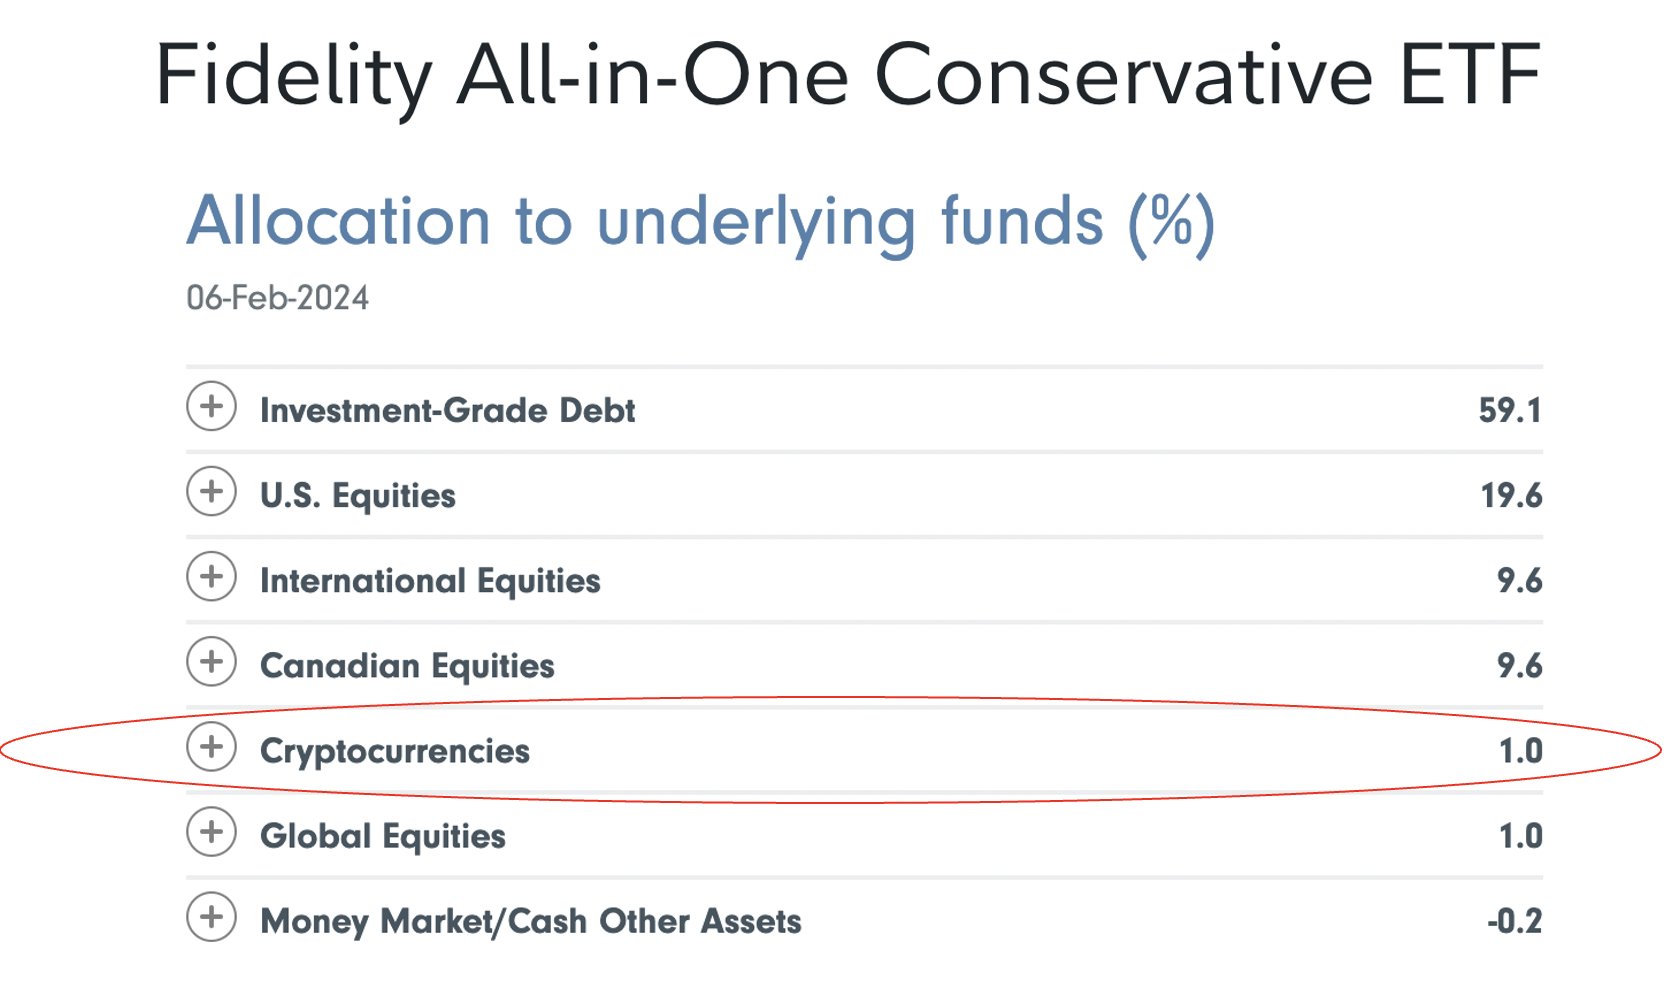 Fidelity All-in-One Conservative ETF: (Source: Matt Hougan)